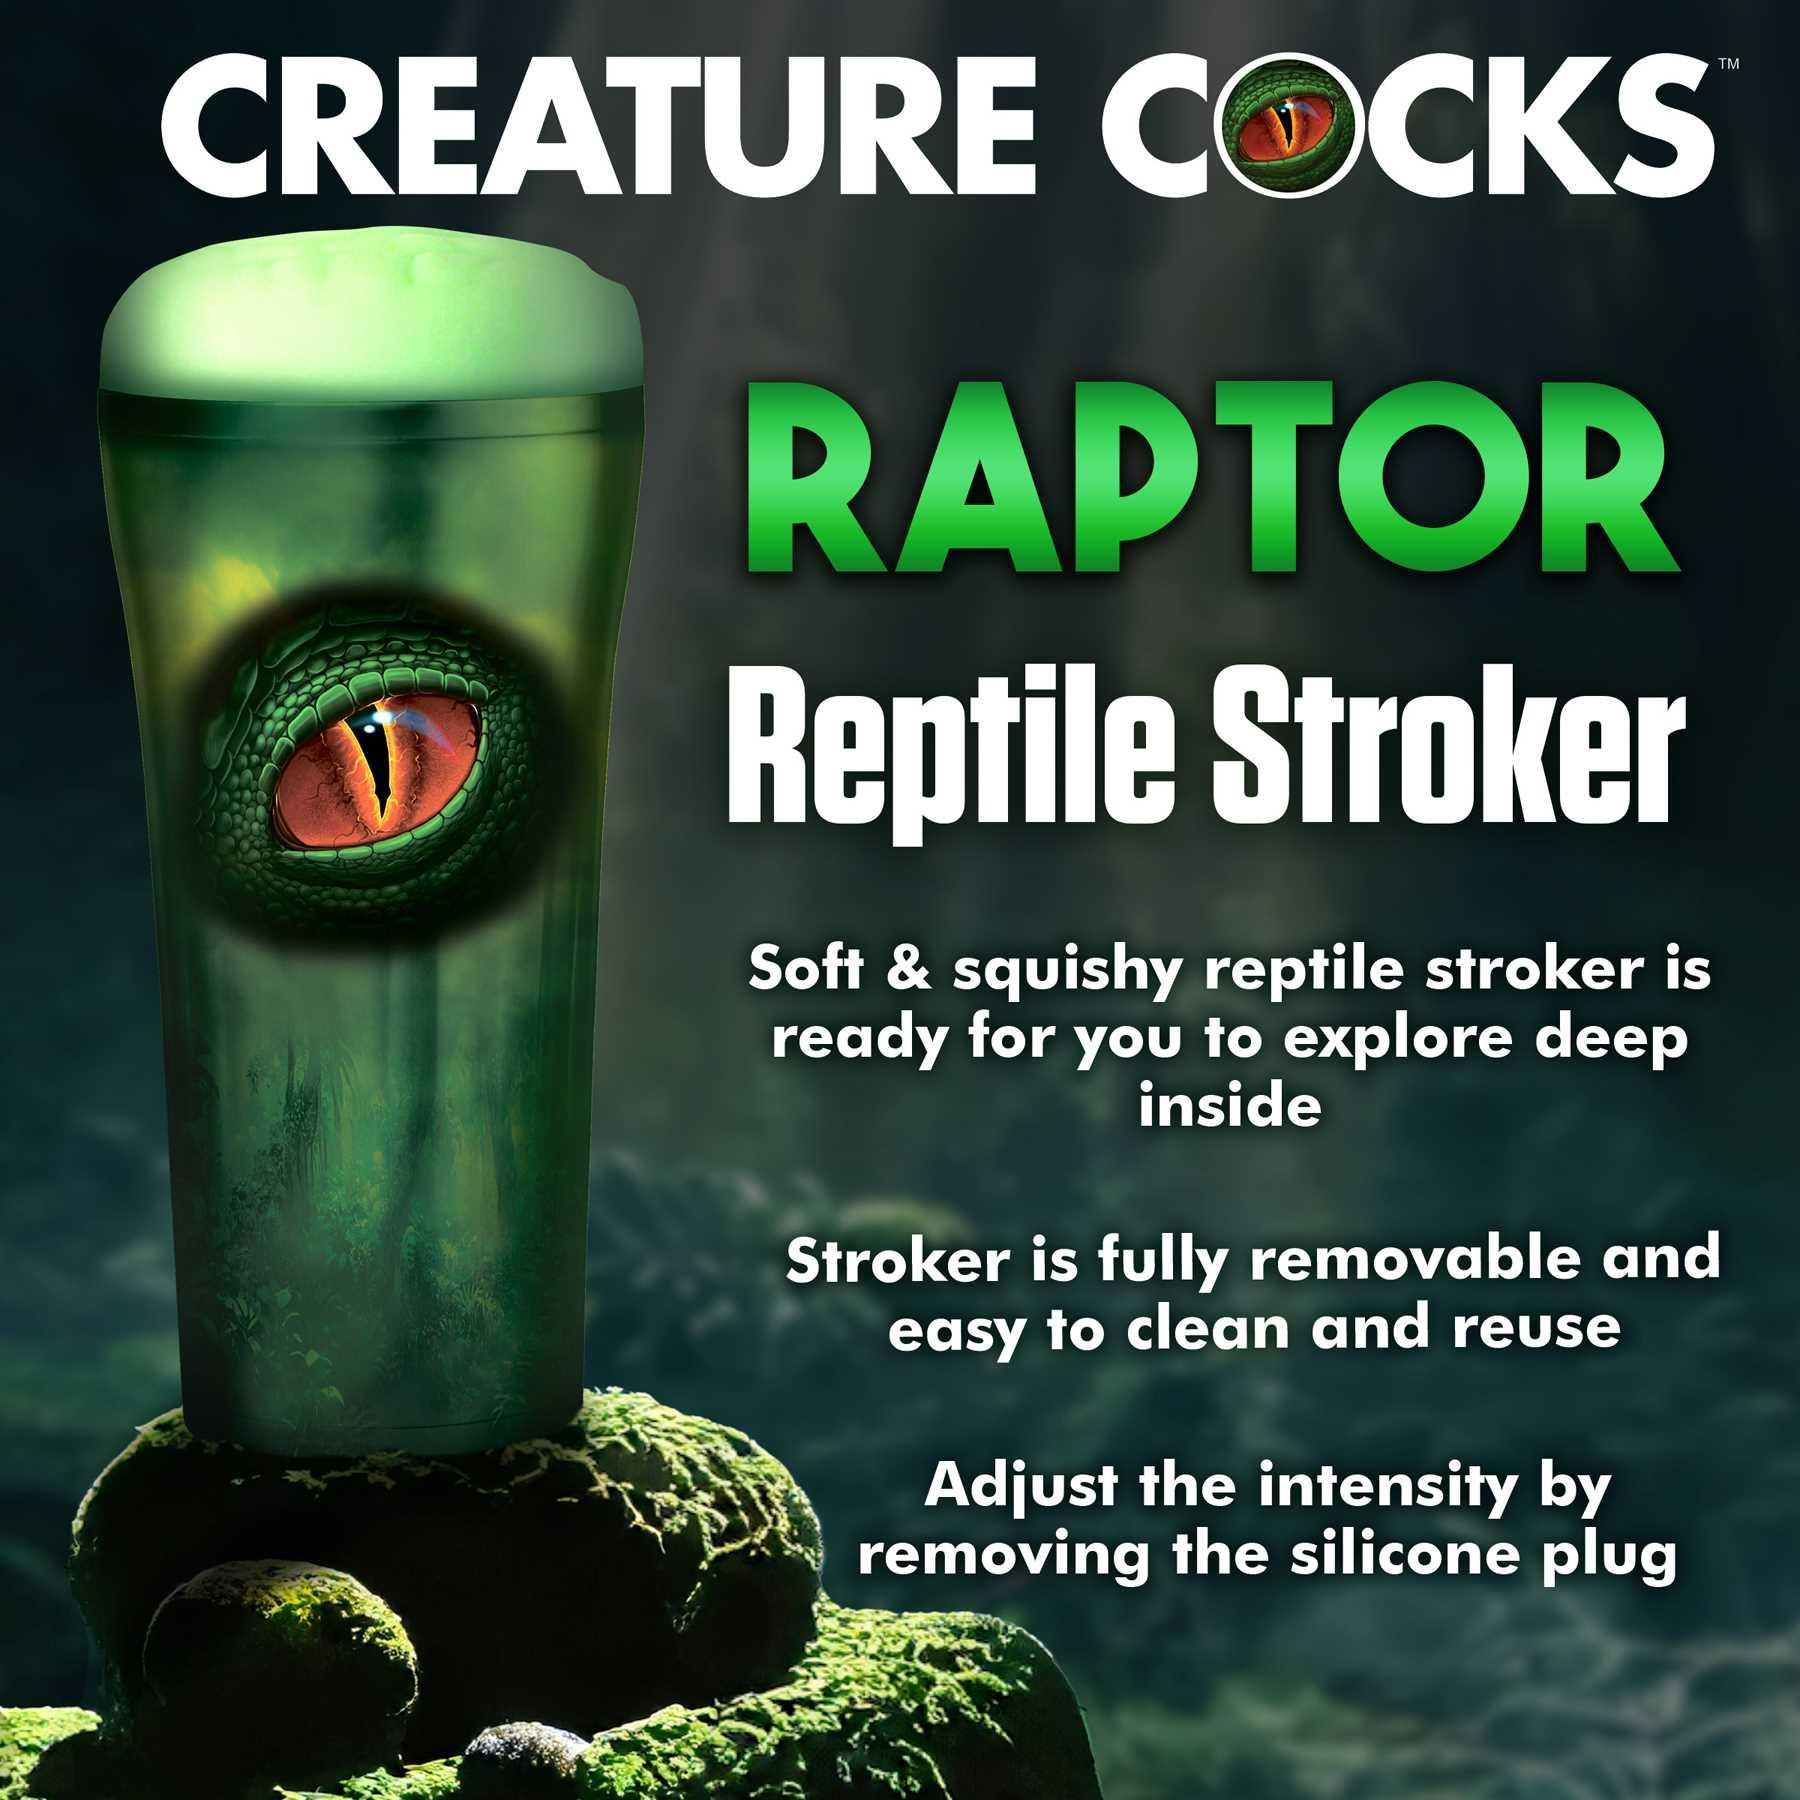 Creature Cocks Raptor Reptile Stroker mood shot #3